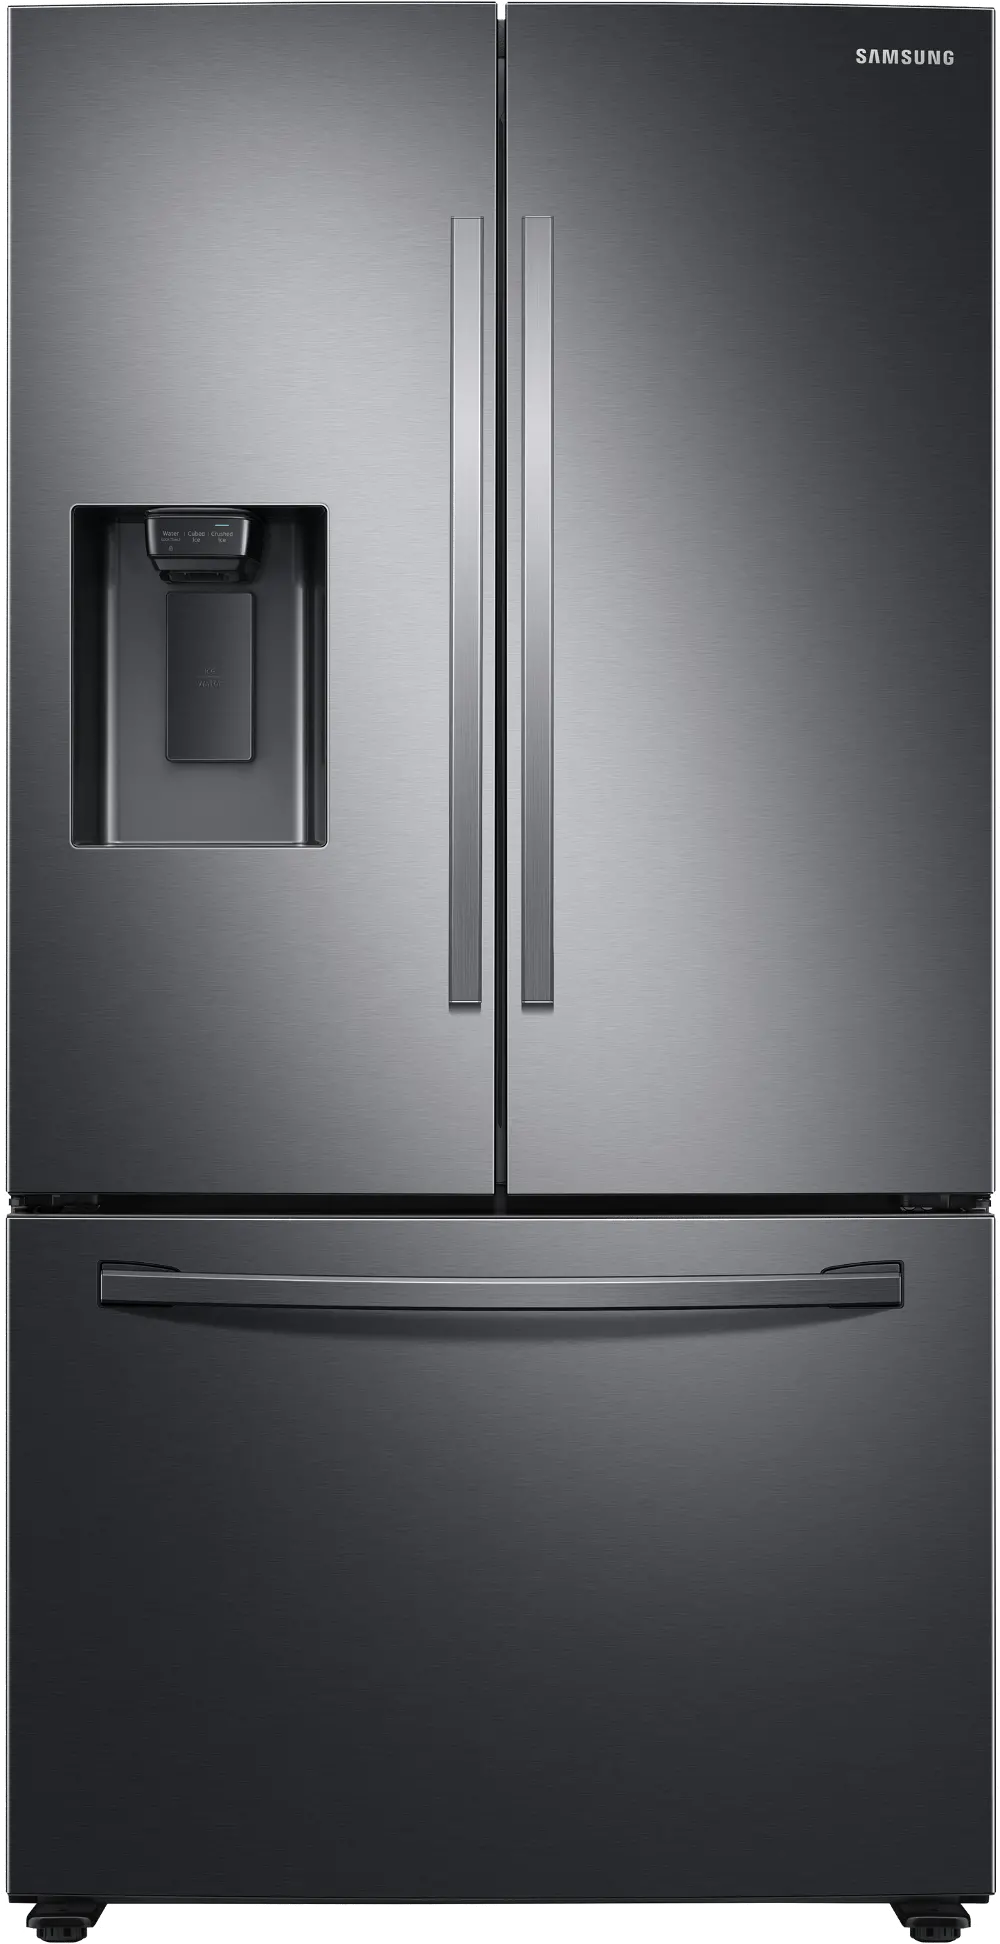 RF27T5201SG Samsung 27 cu ft French Door Refrigerator - Black Stainless Steel-1